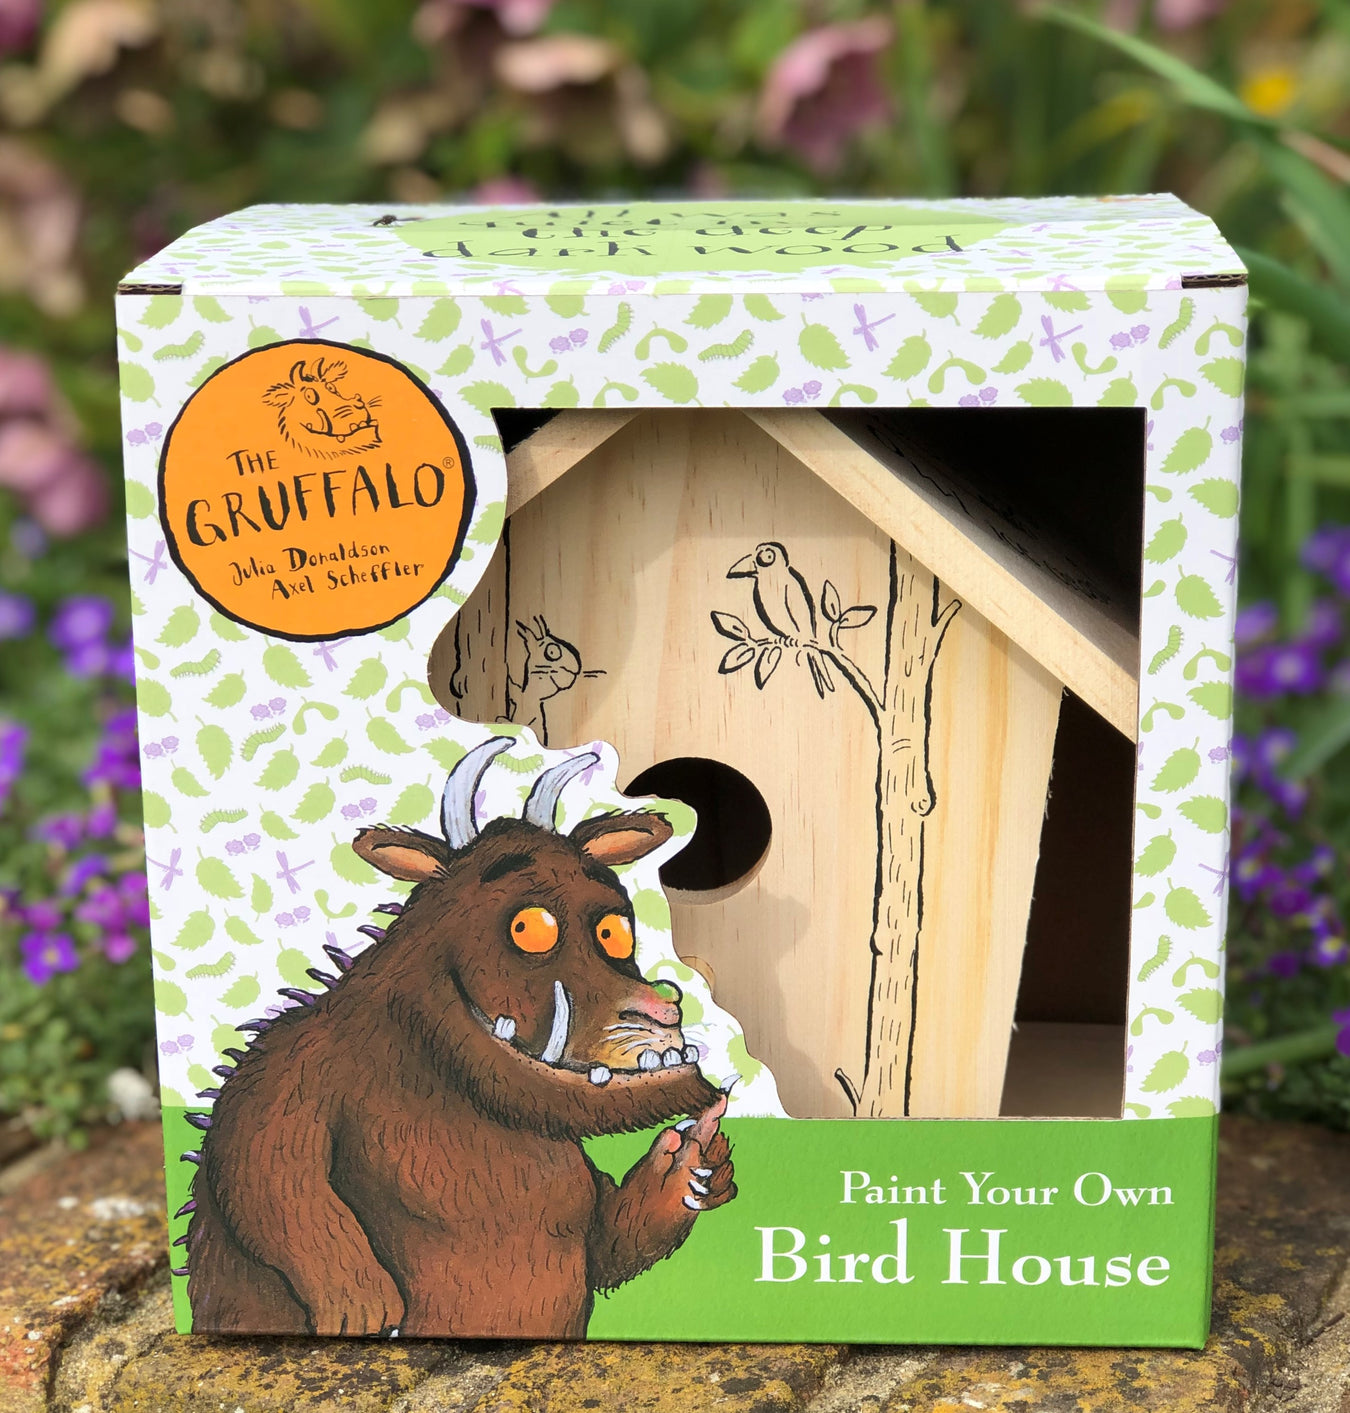 Gruffalo Paint Your Own Bird Box